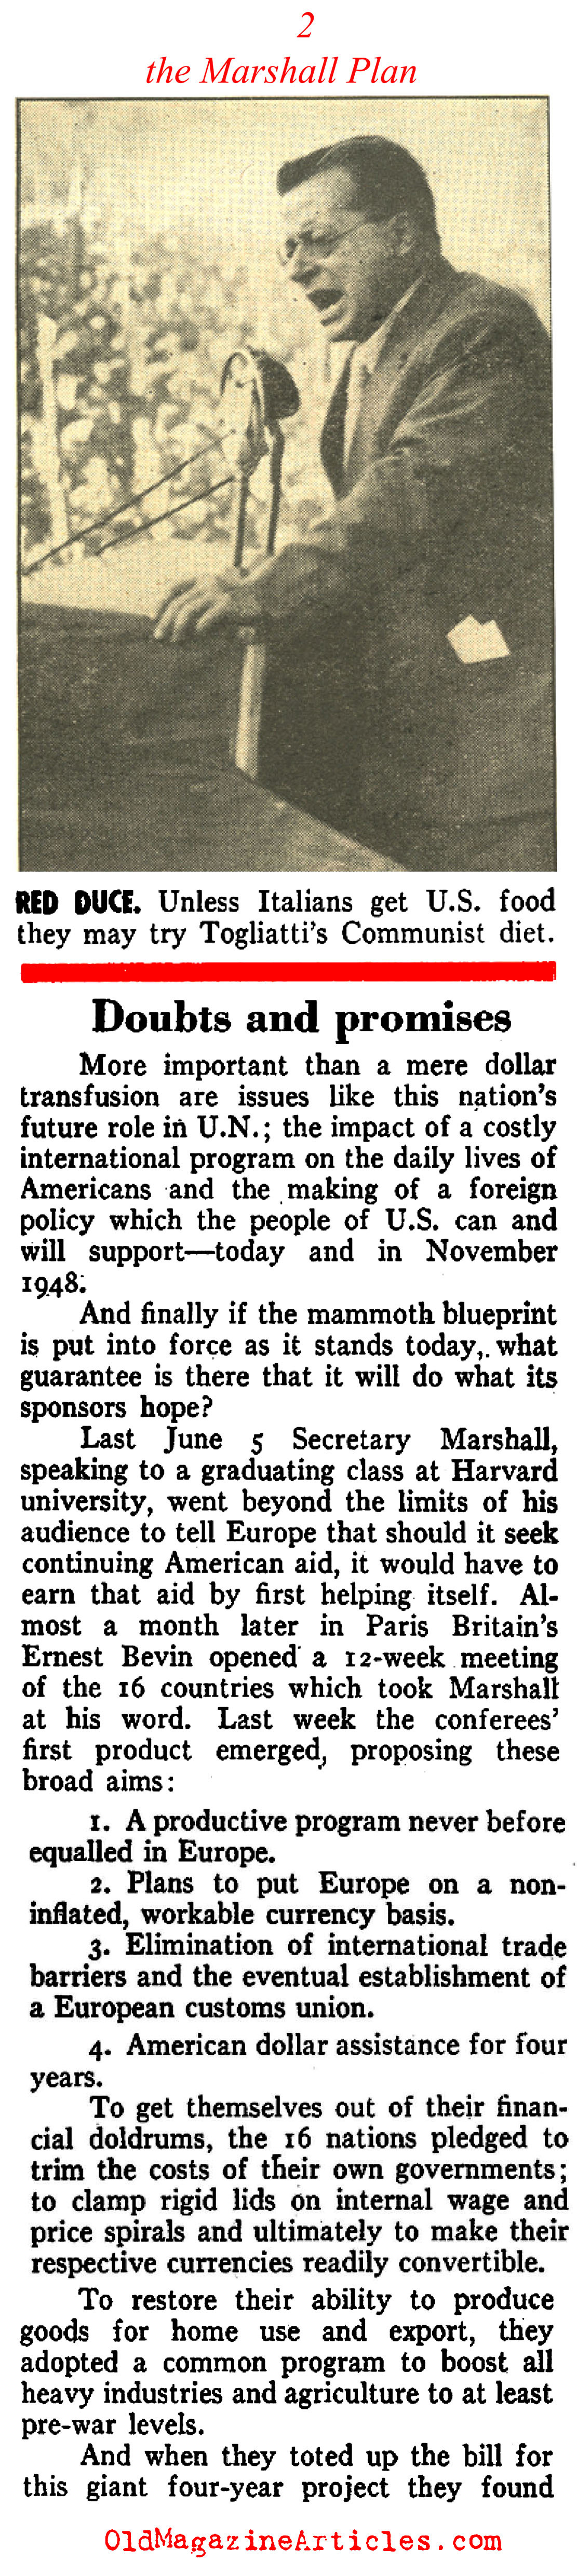 The Marshall Plan: Rebuilding Europe (Pathfinder Magazine, 1947)